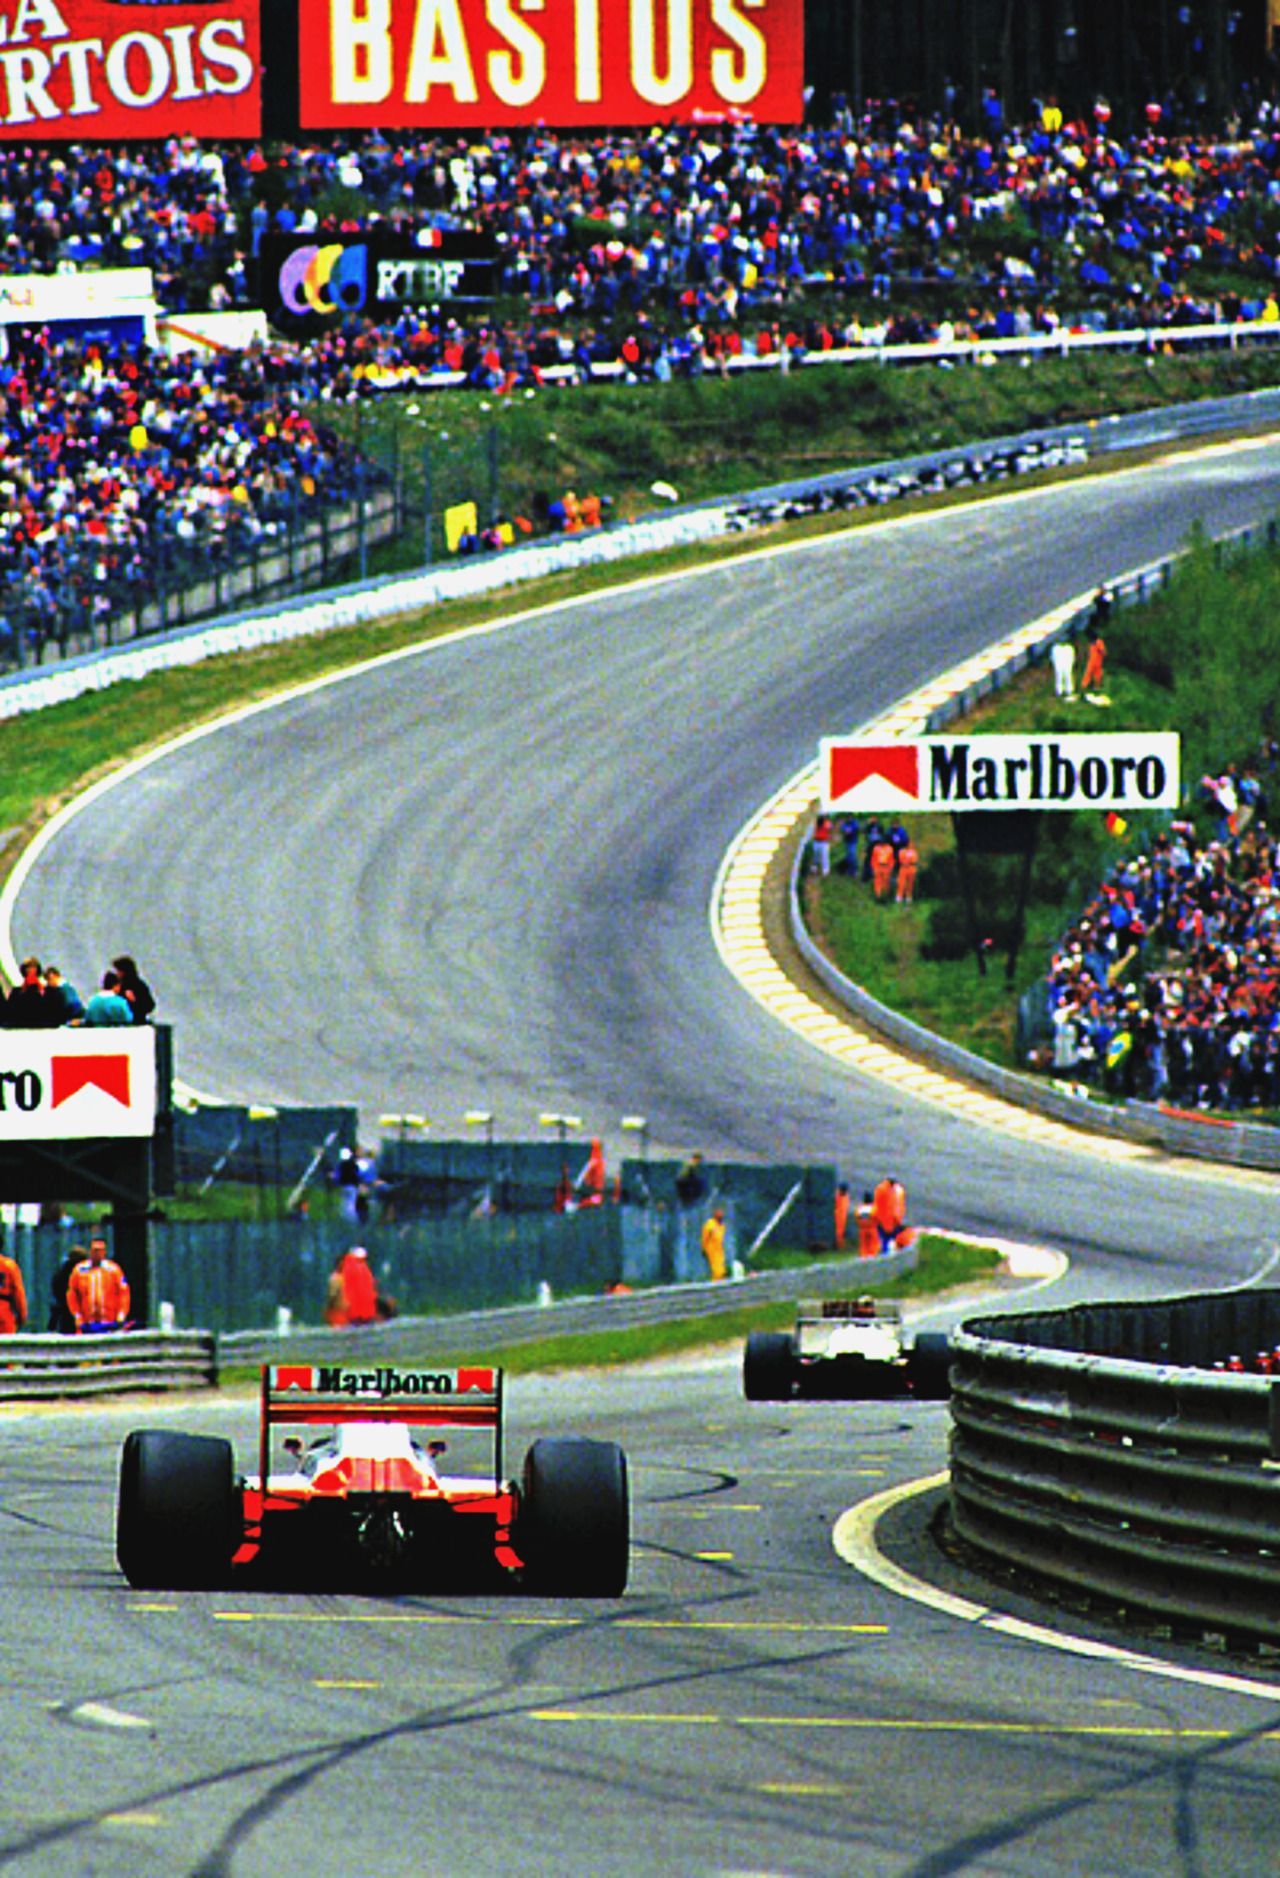 f1championship: “Alain Prost l Belgium 1987 ”. Racing photo, Classic racing cars, Formula racing